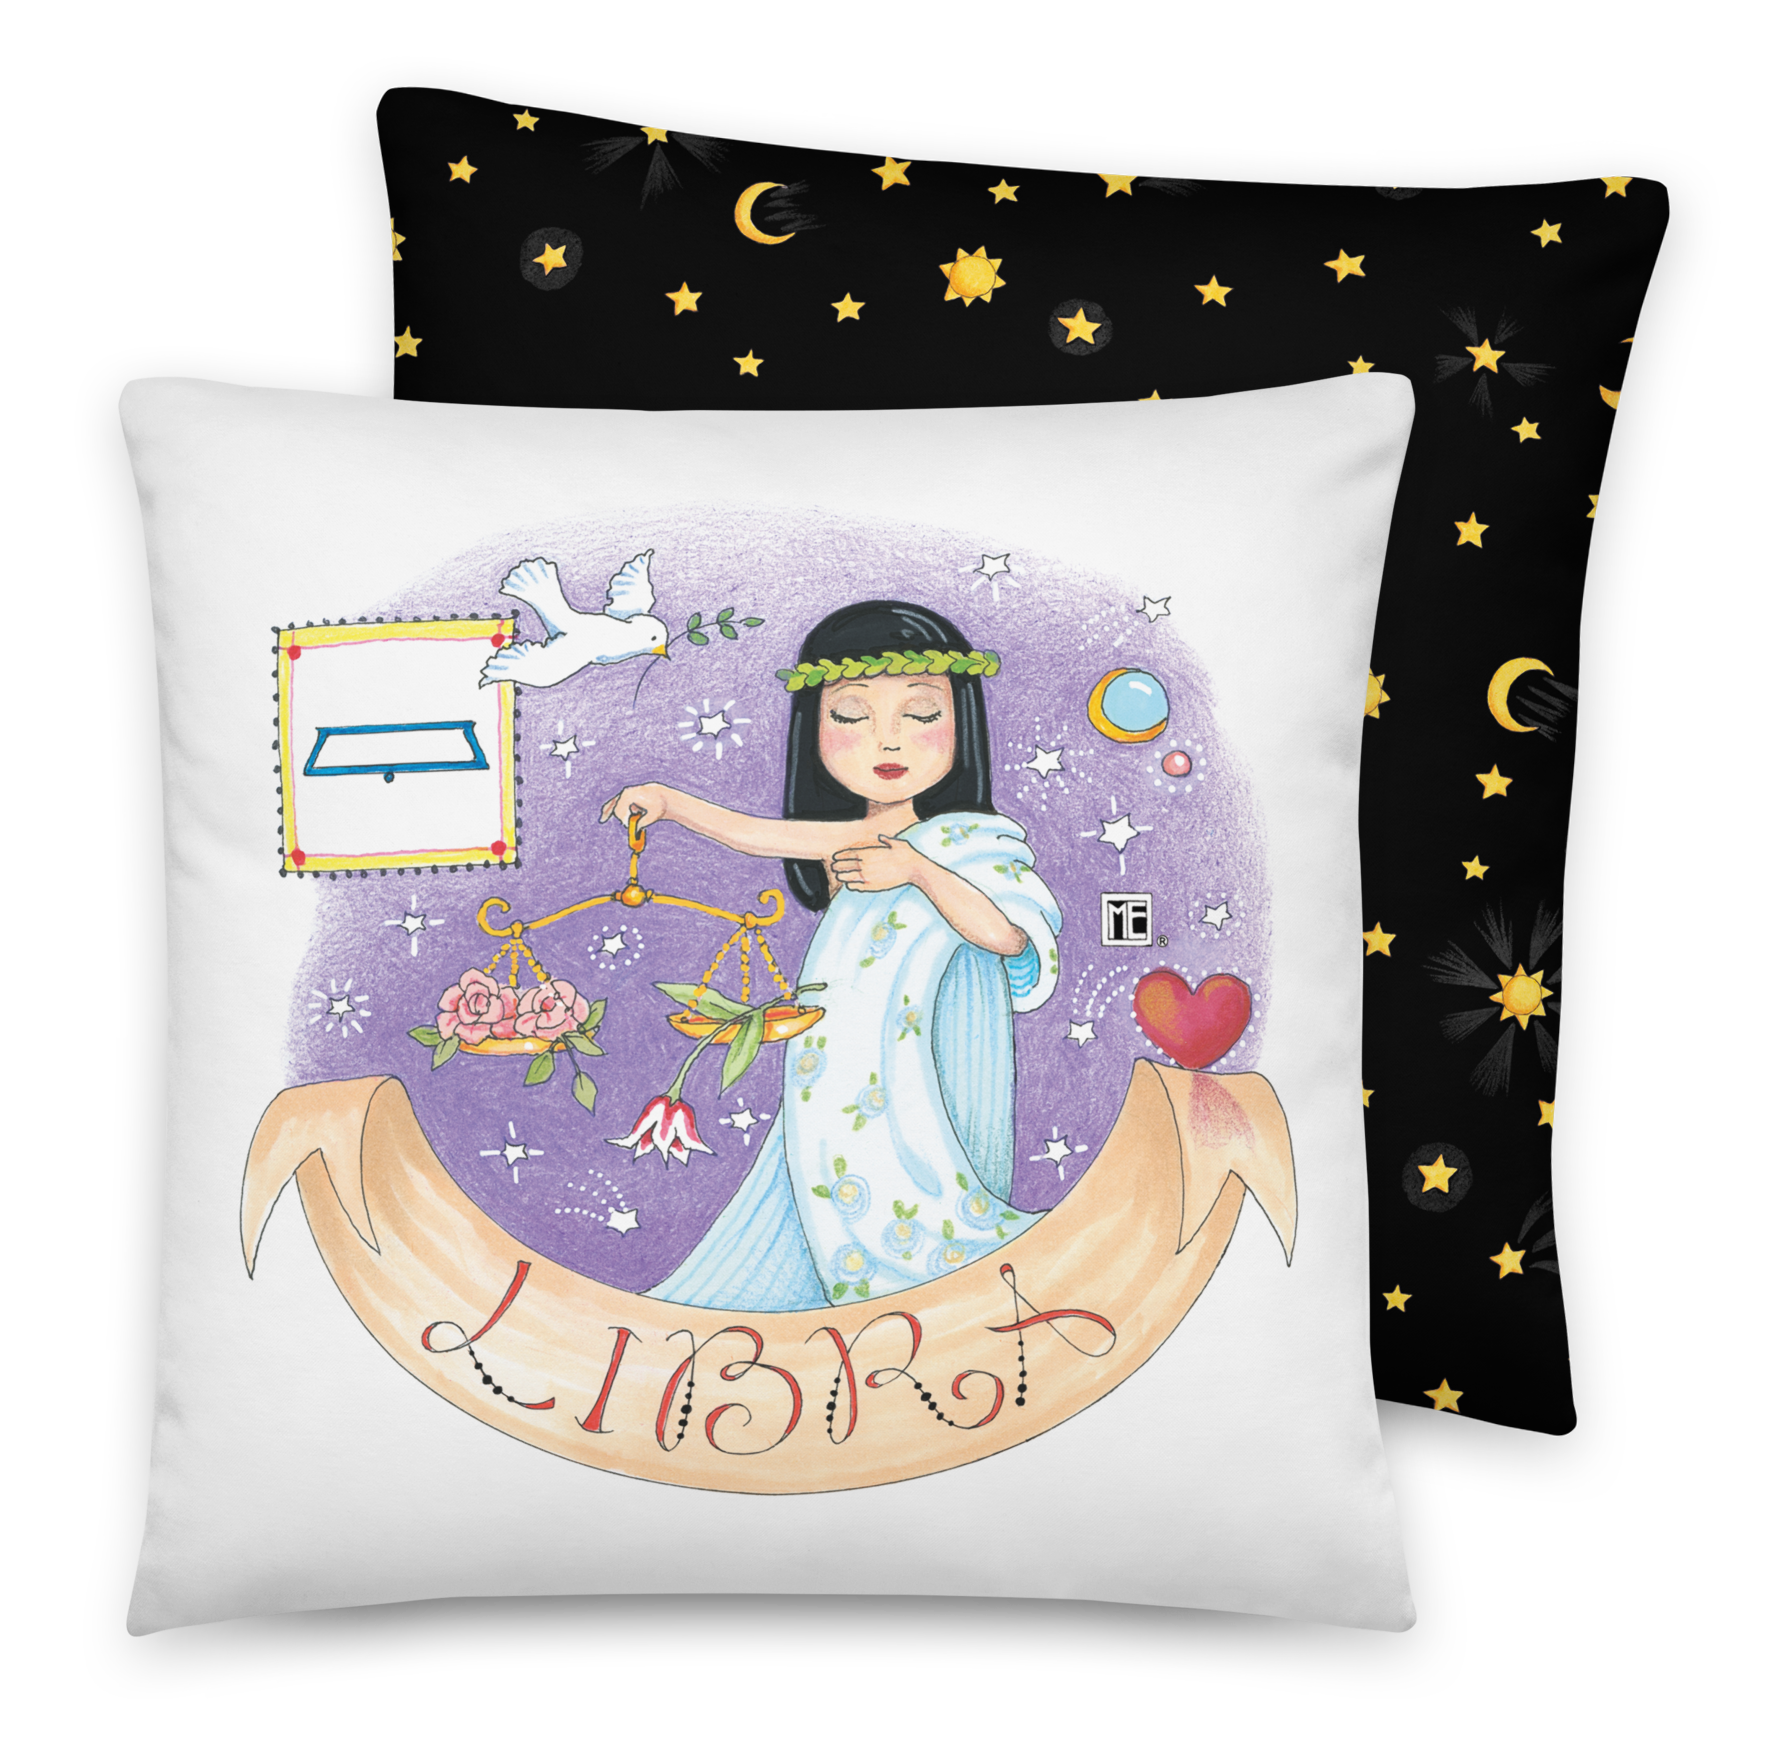 Libra Pillow